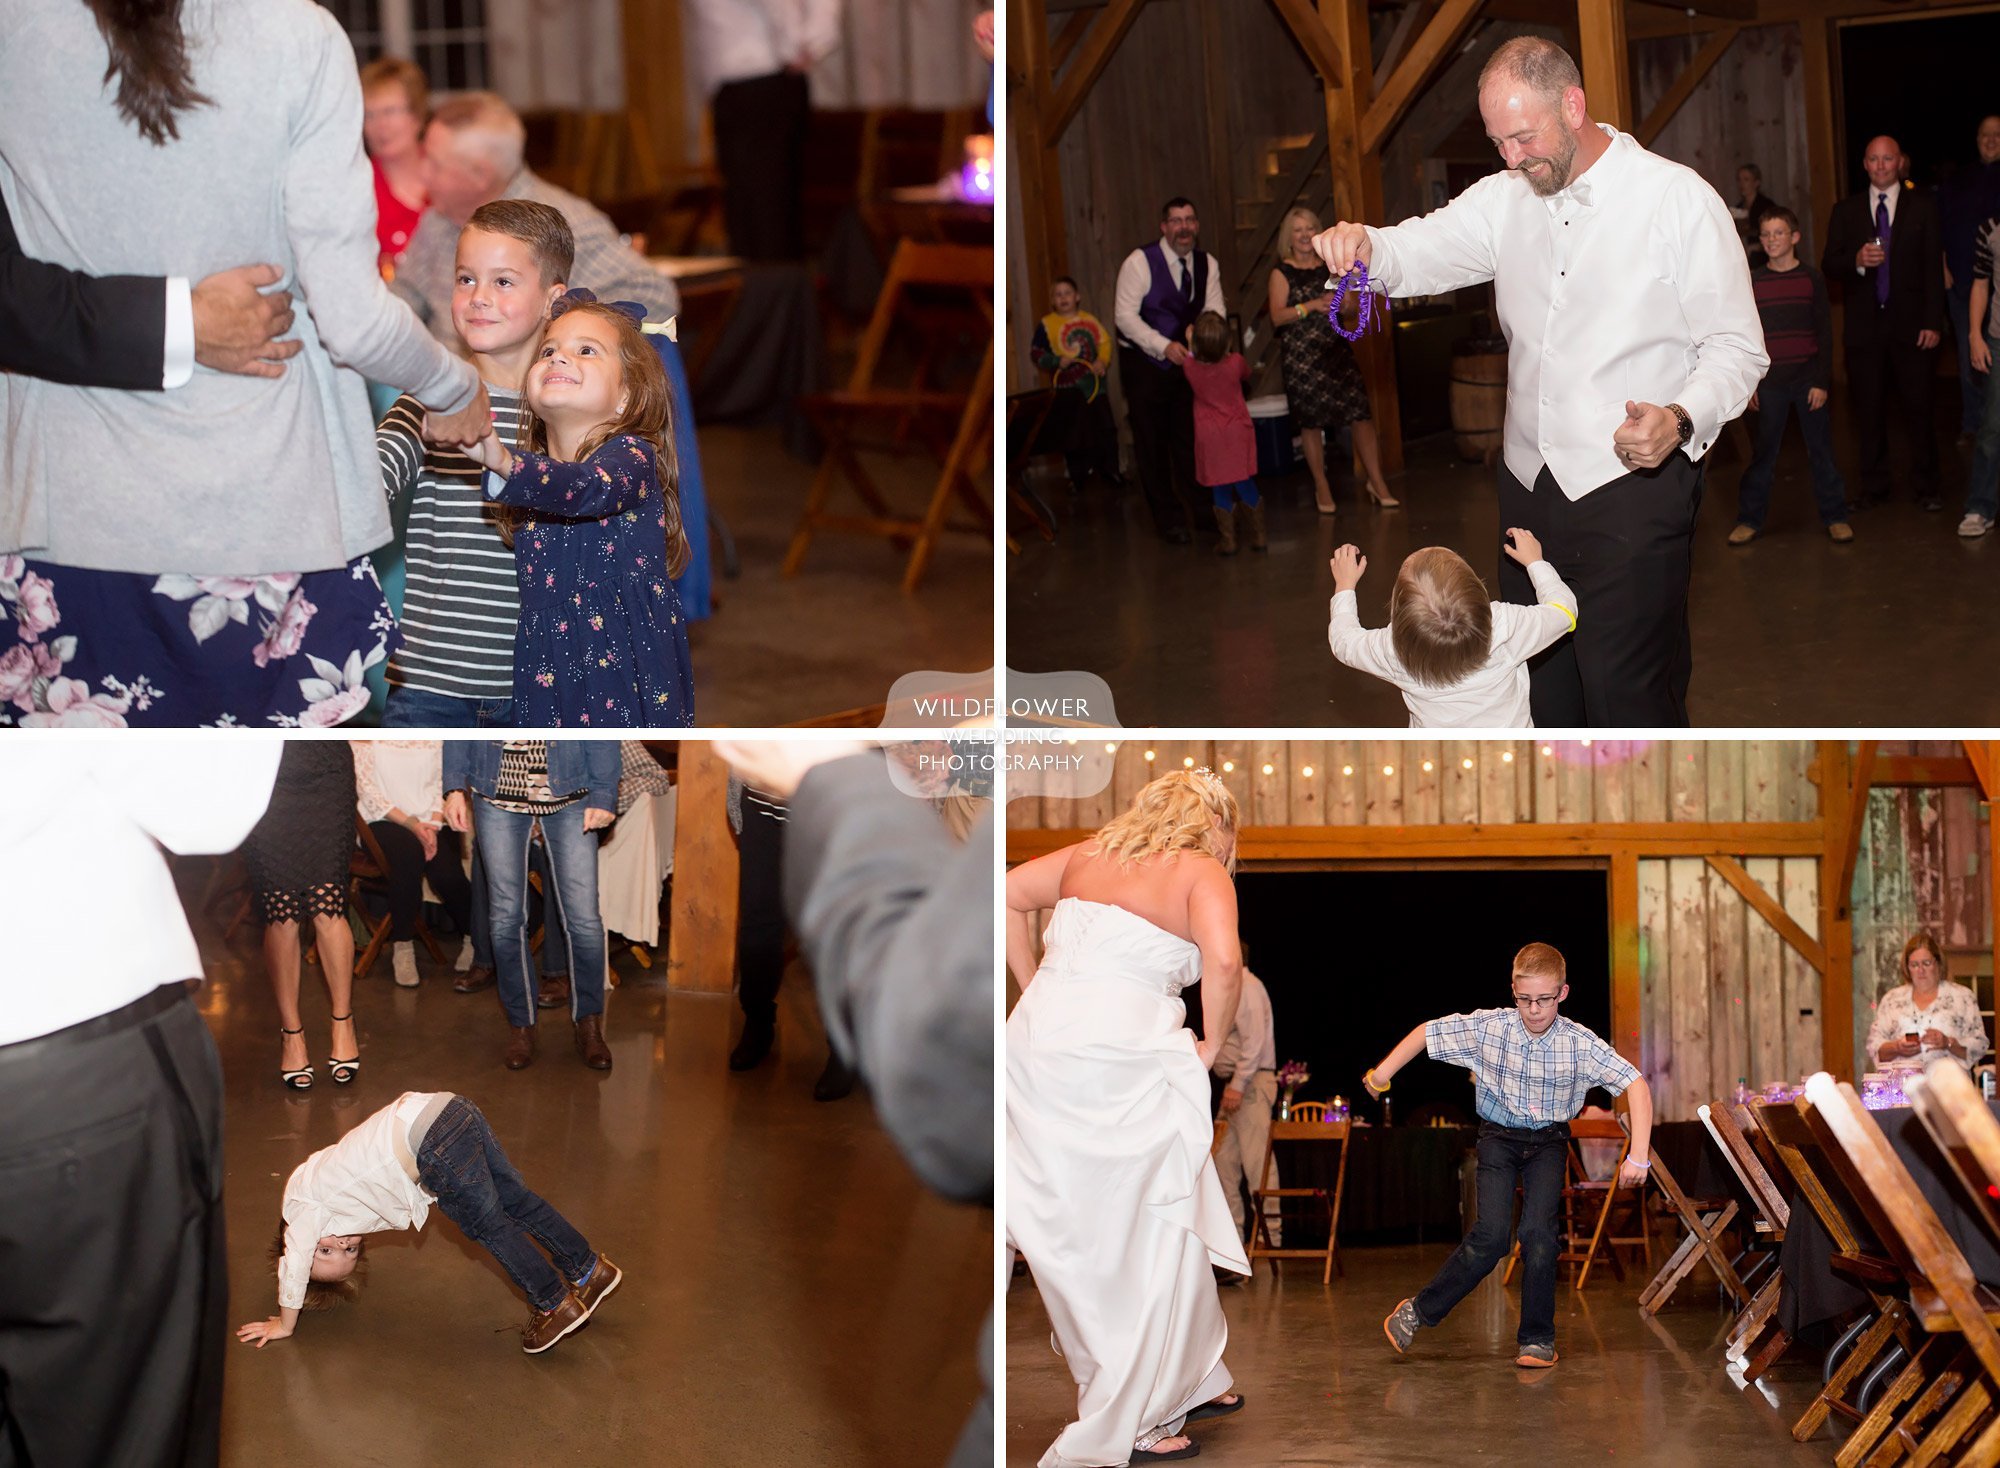 Funny dancing photos at Schwinn Barn.